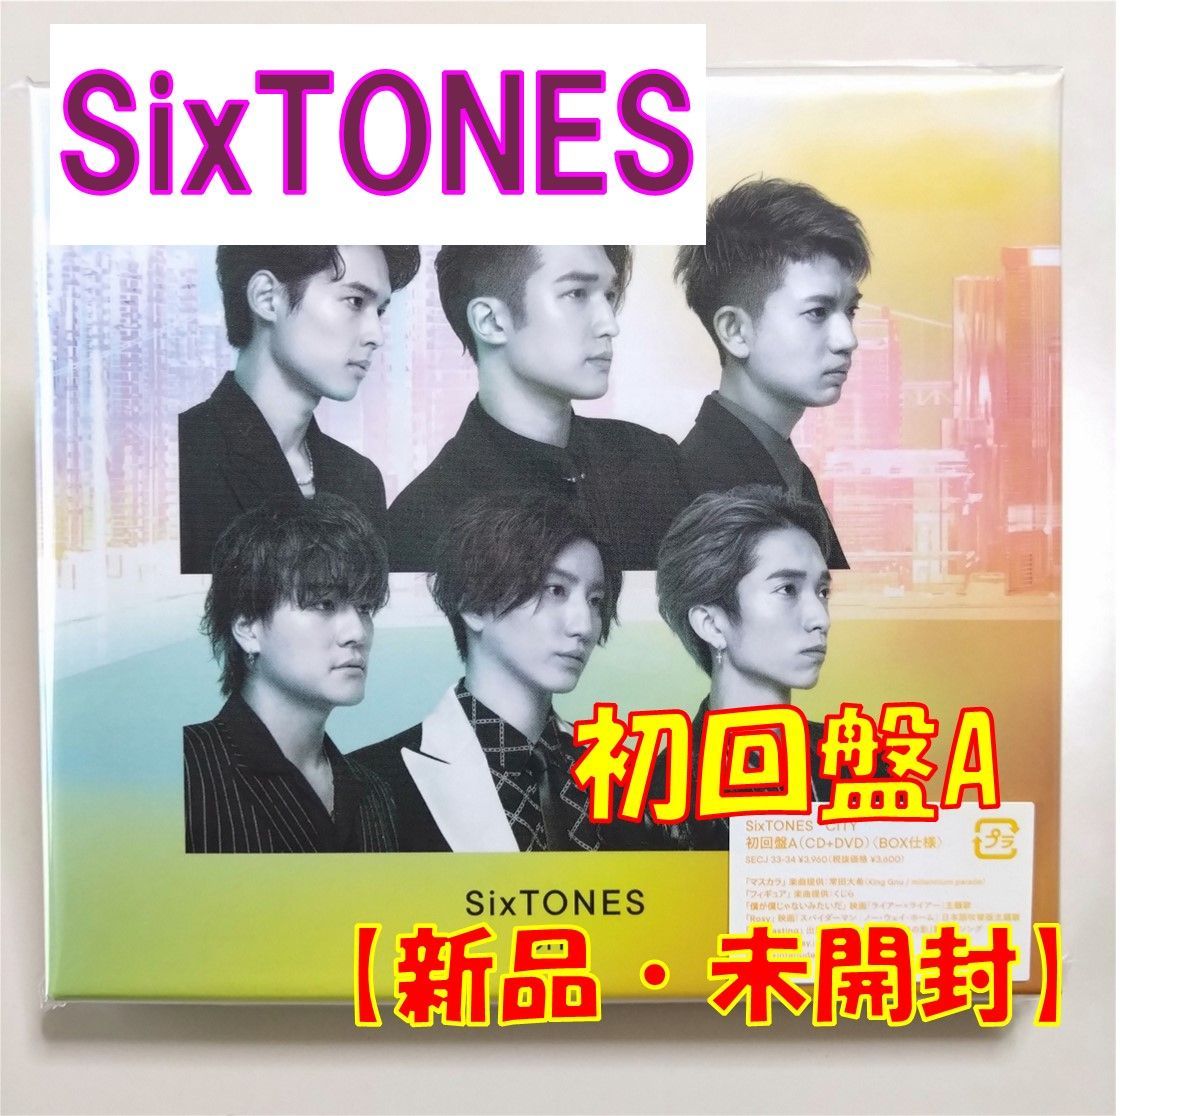 【CD】SixTONES 【CITY】(初回盤A)【CD+DVD】【新品　未開封】【匿名配送】即購入OK